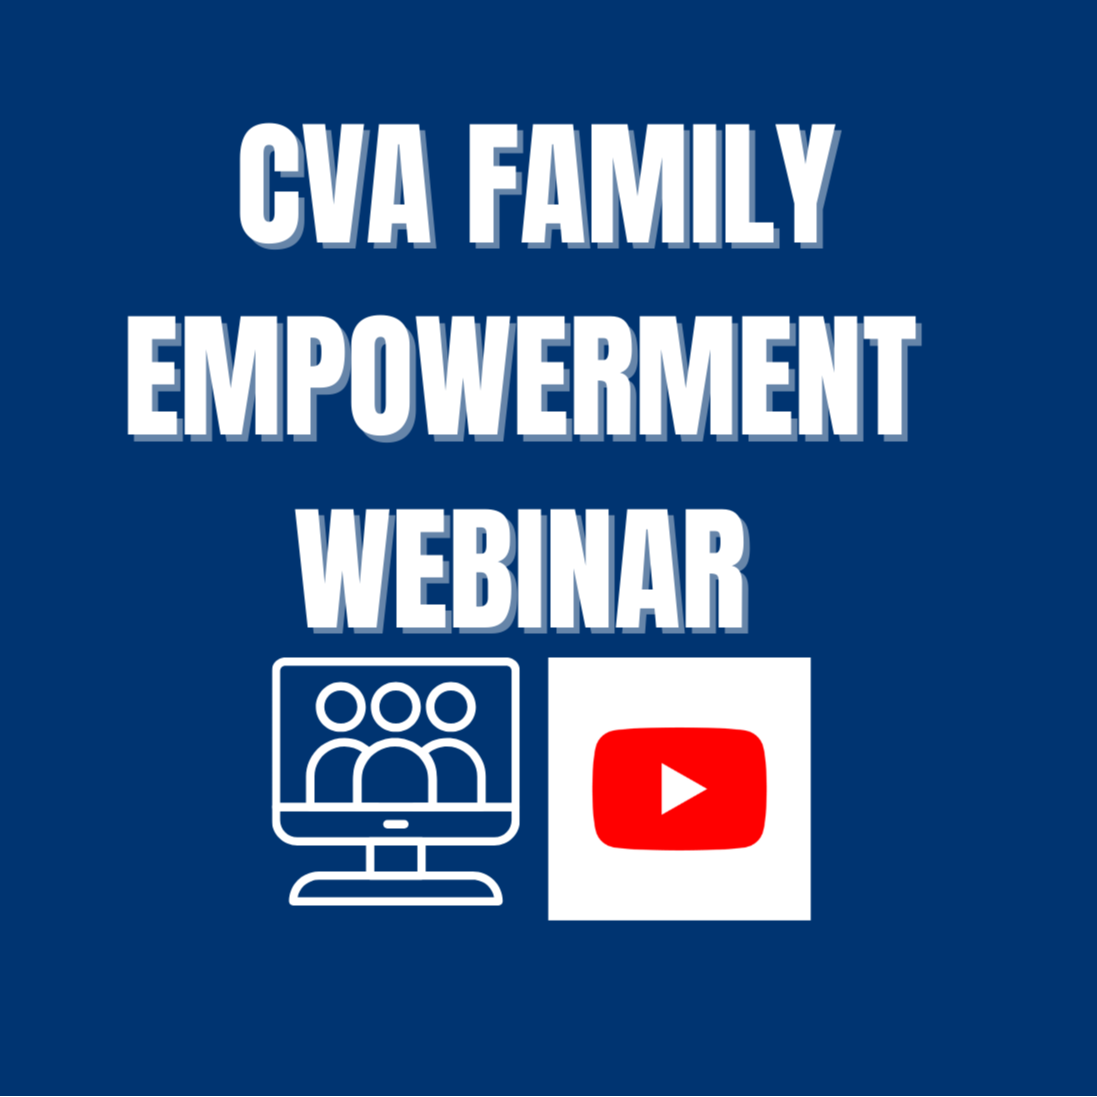 CVA family empowerment webinar 